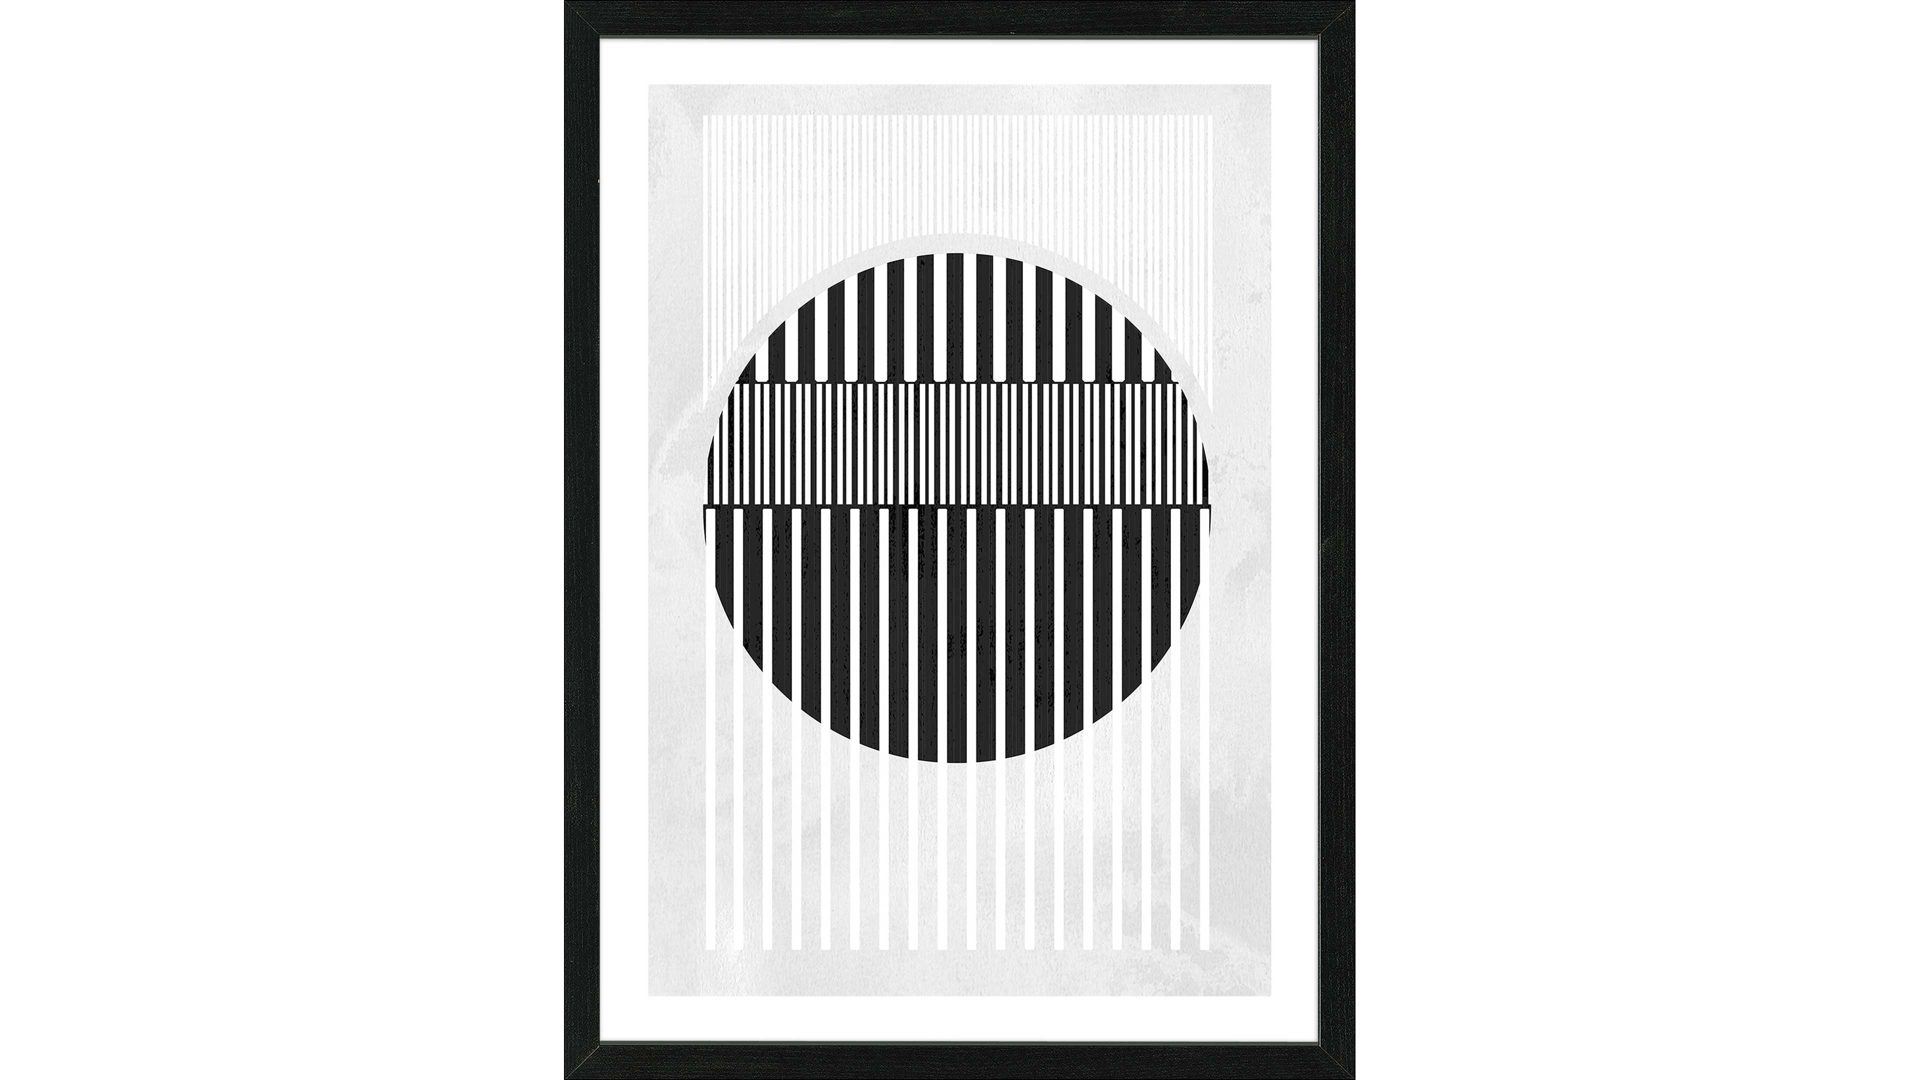 Kunstdruck Interliving BEST BUDDYS! aus Karton / Papier / Pappe in Grau PRO®ART Kunstdruck Scandic Living Lines and shapes II - ca. 55 x 75 cm